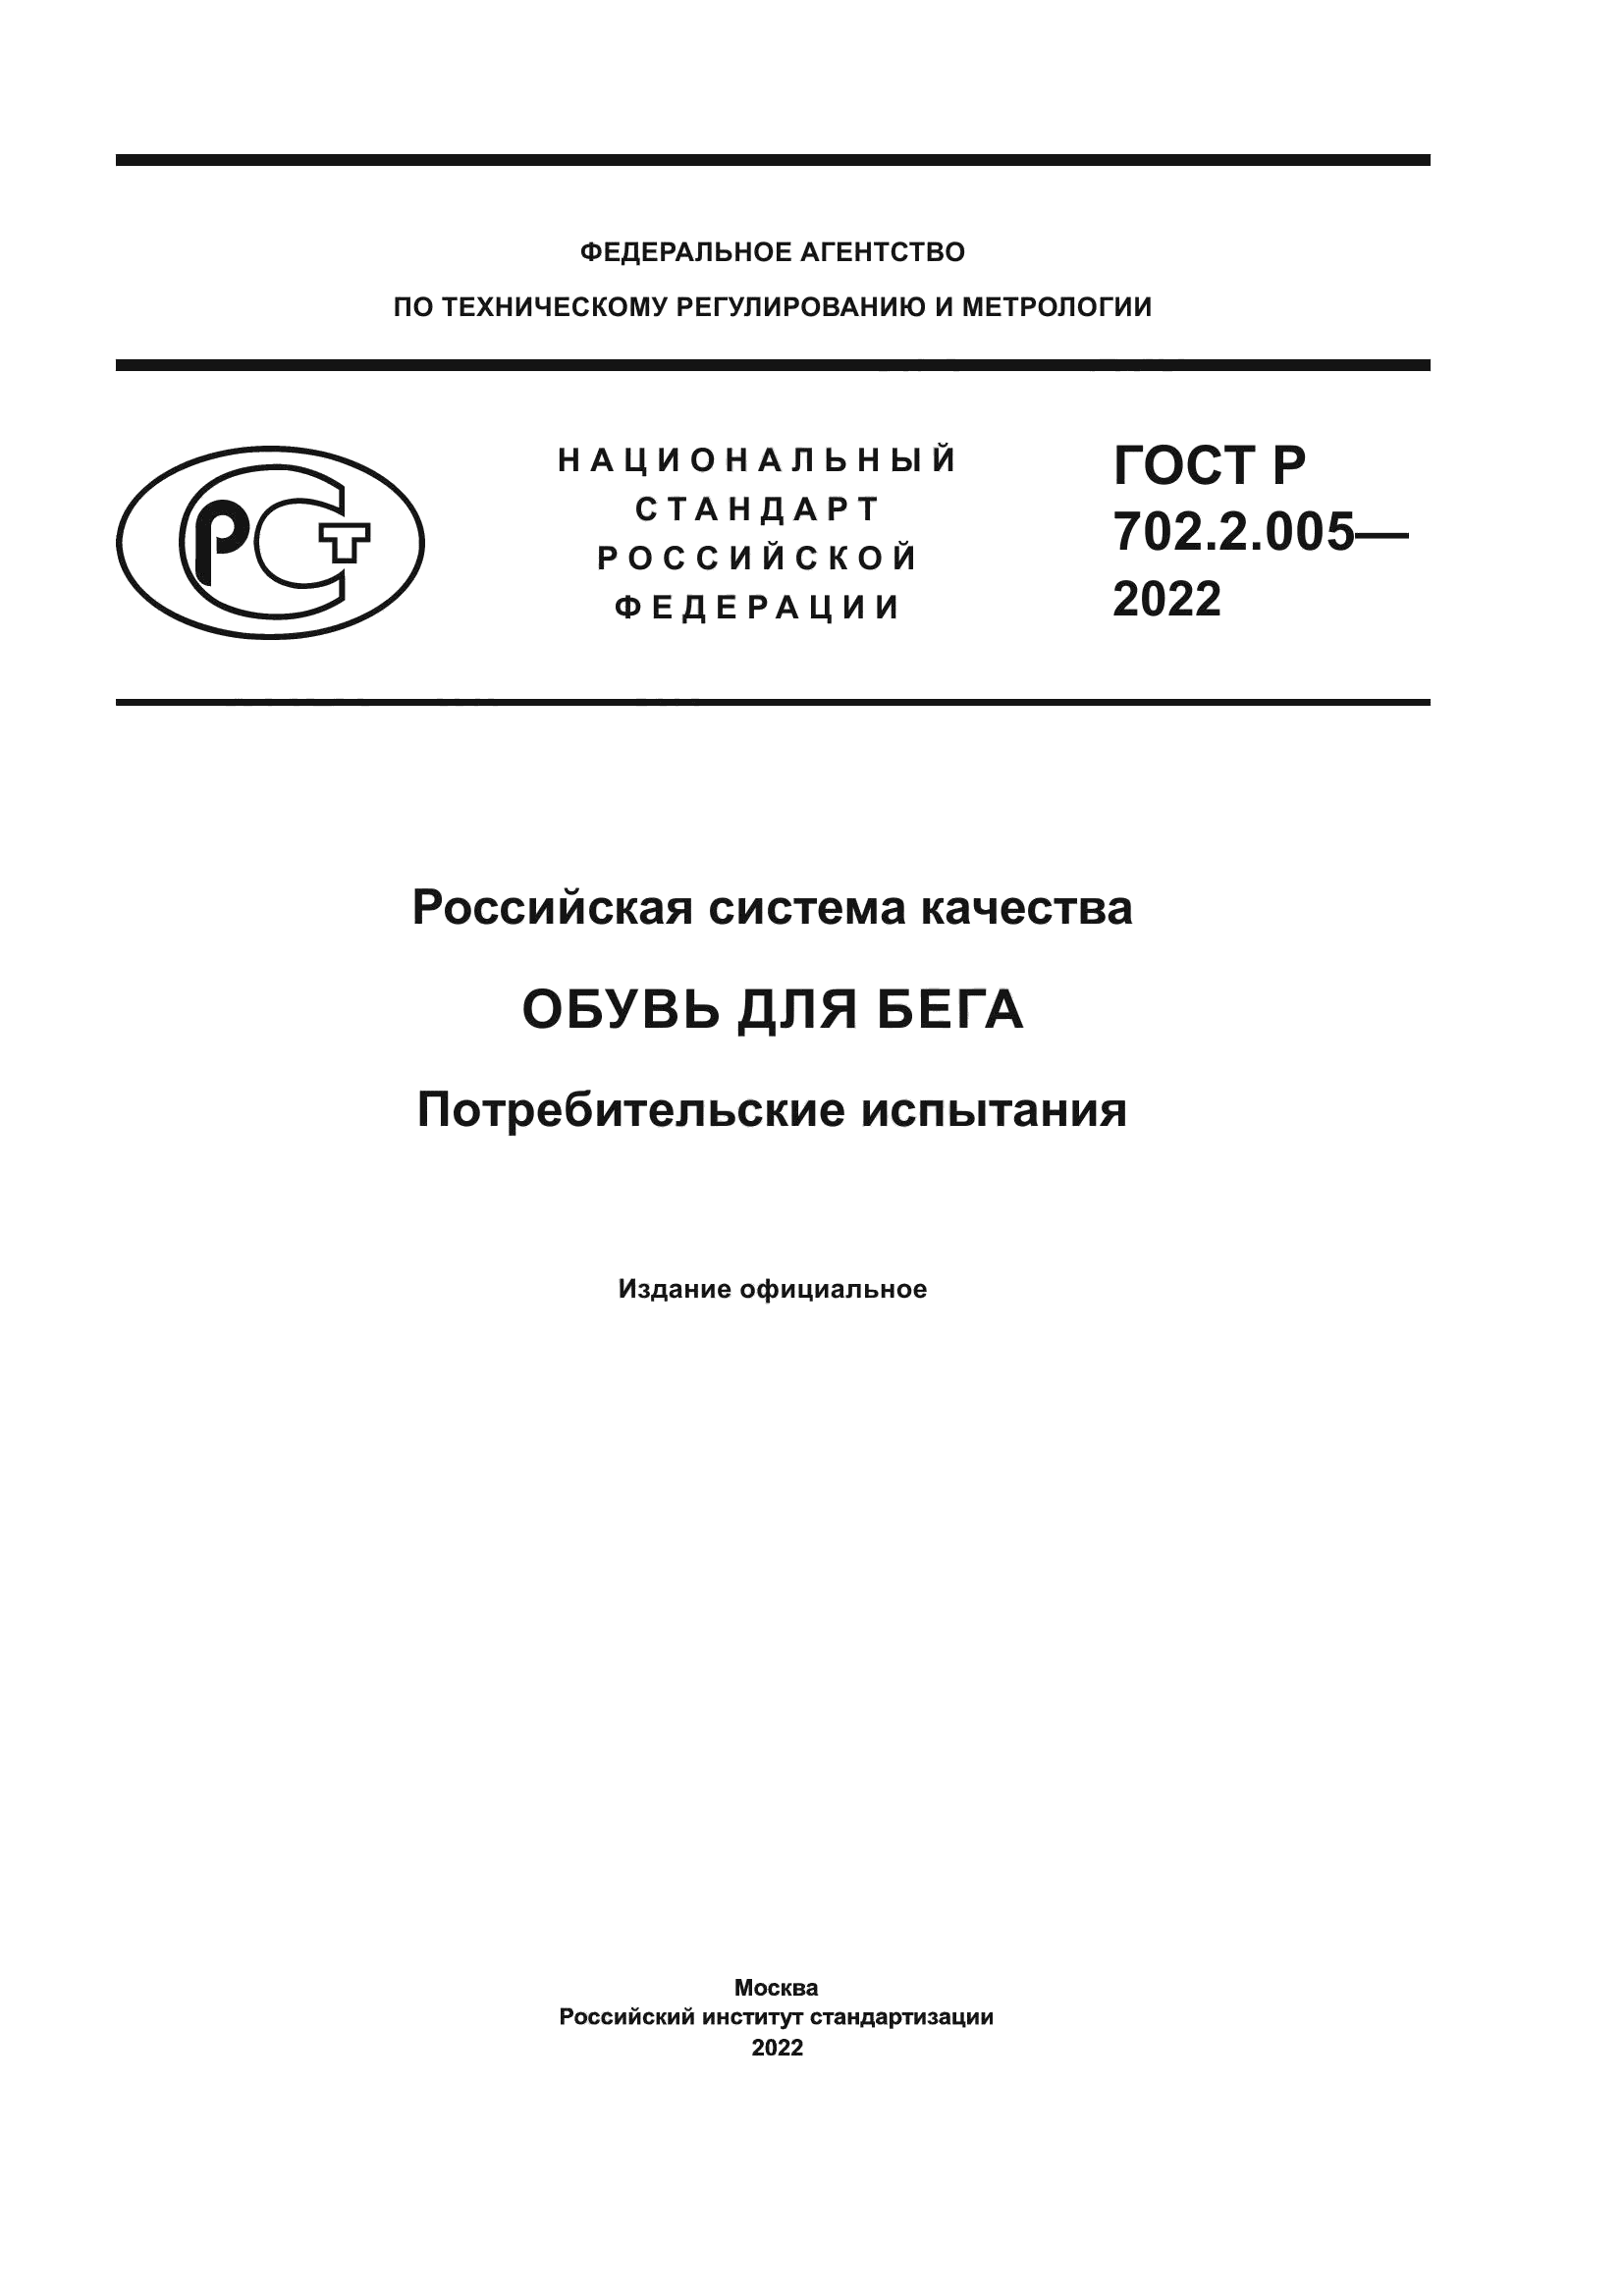 ГОСТ Р 702.2.005-2022